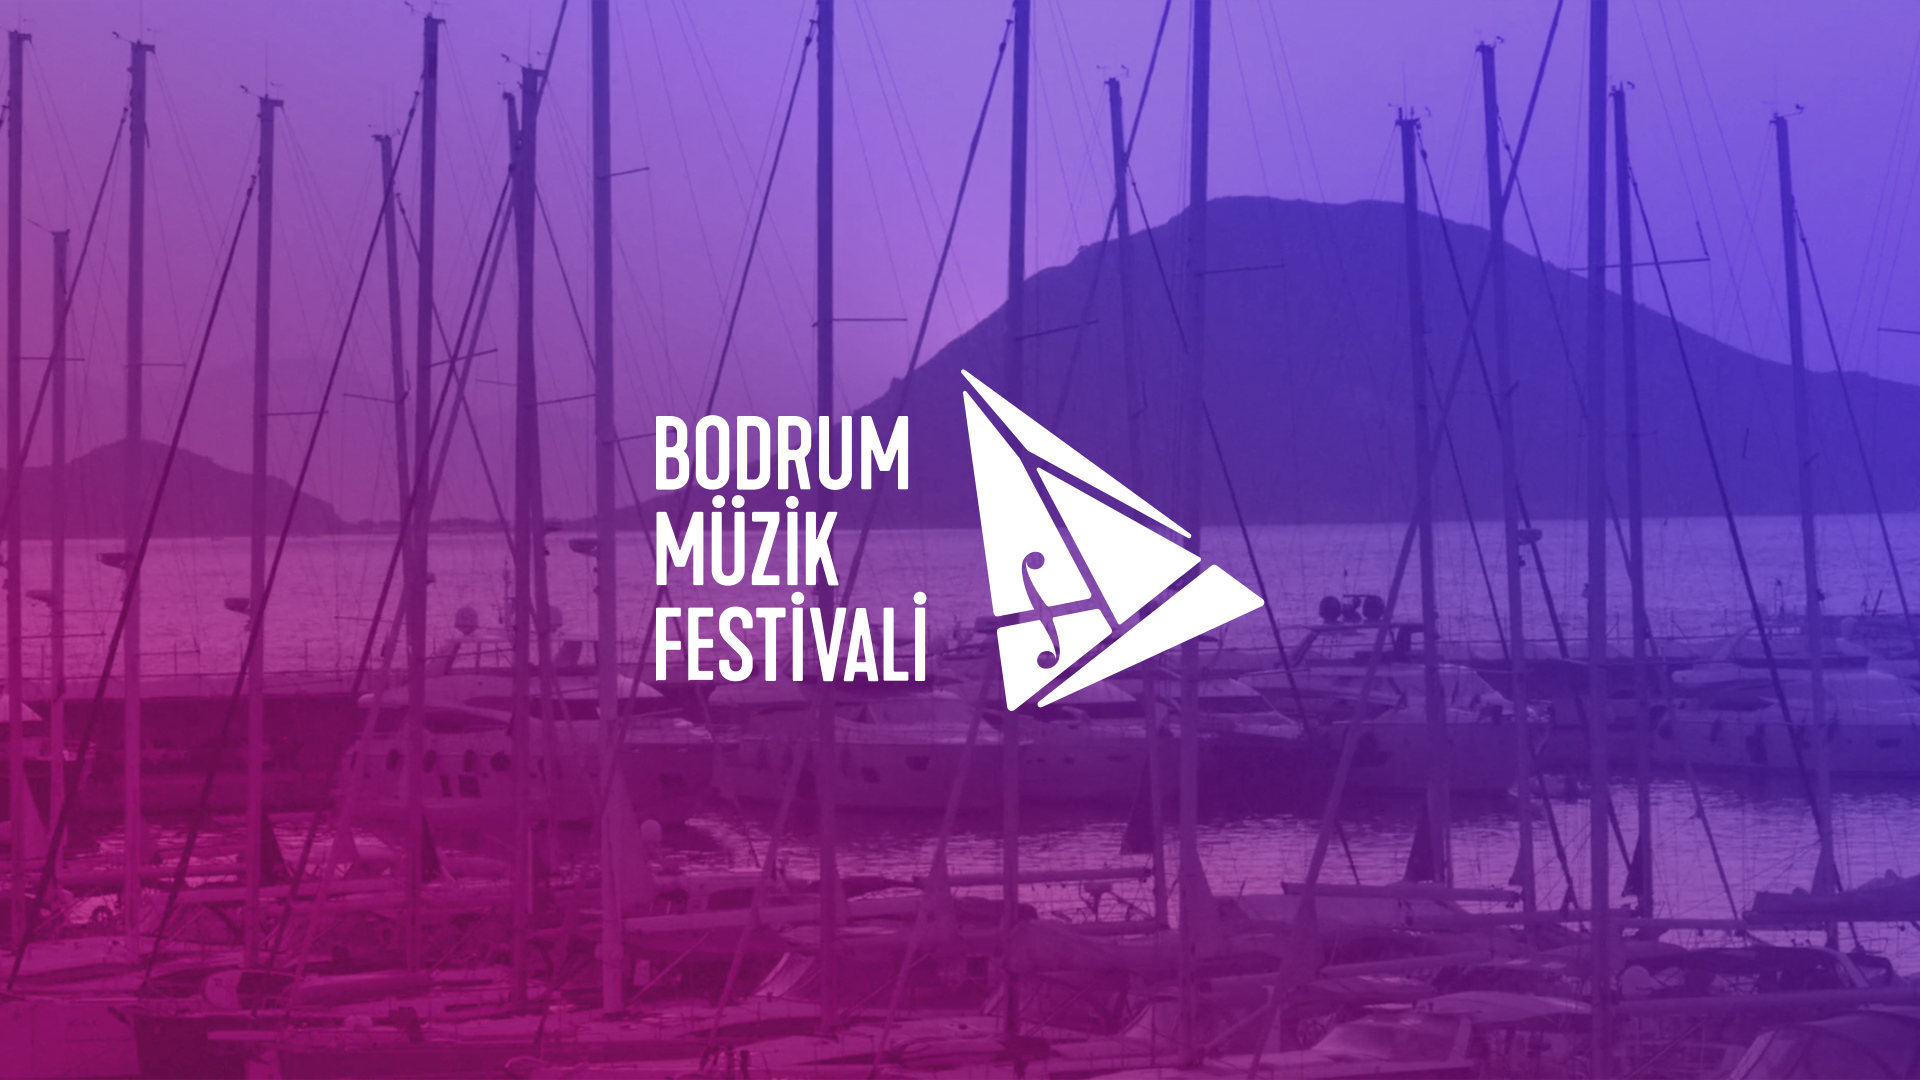 baskaisler-agency-bodrum-muzik-festivali-v2